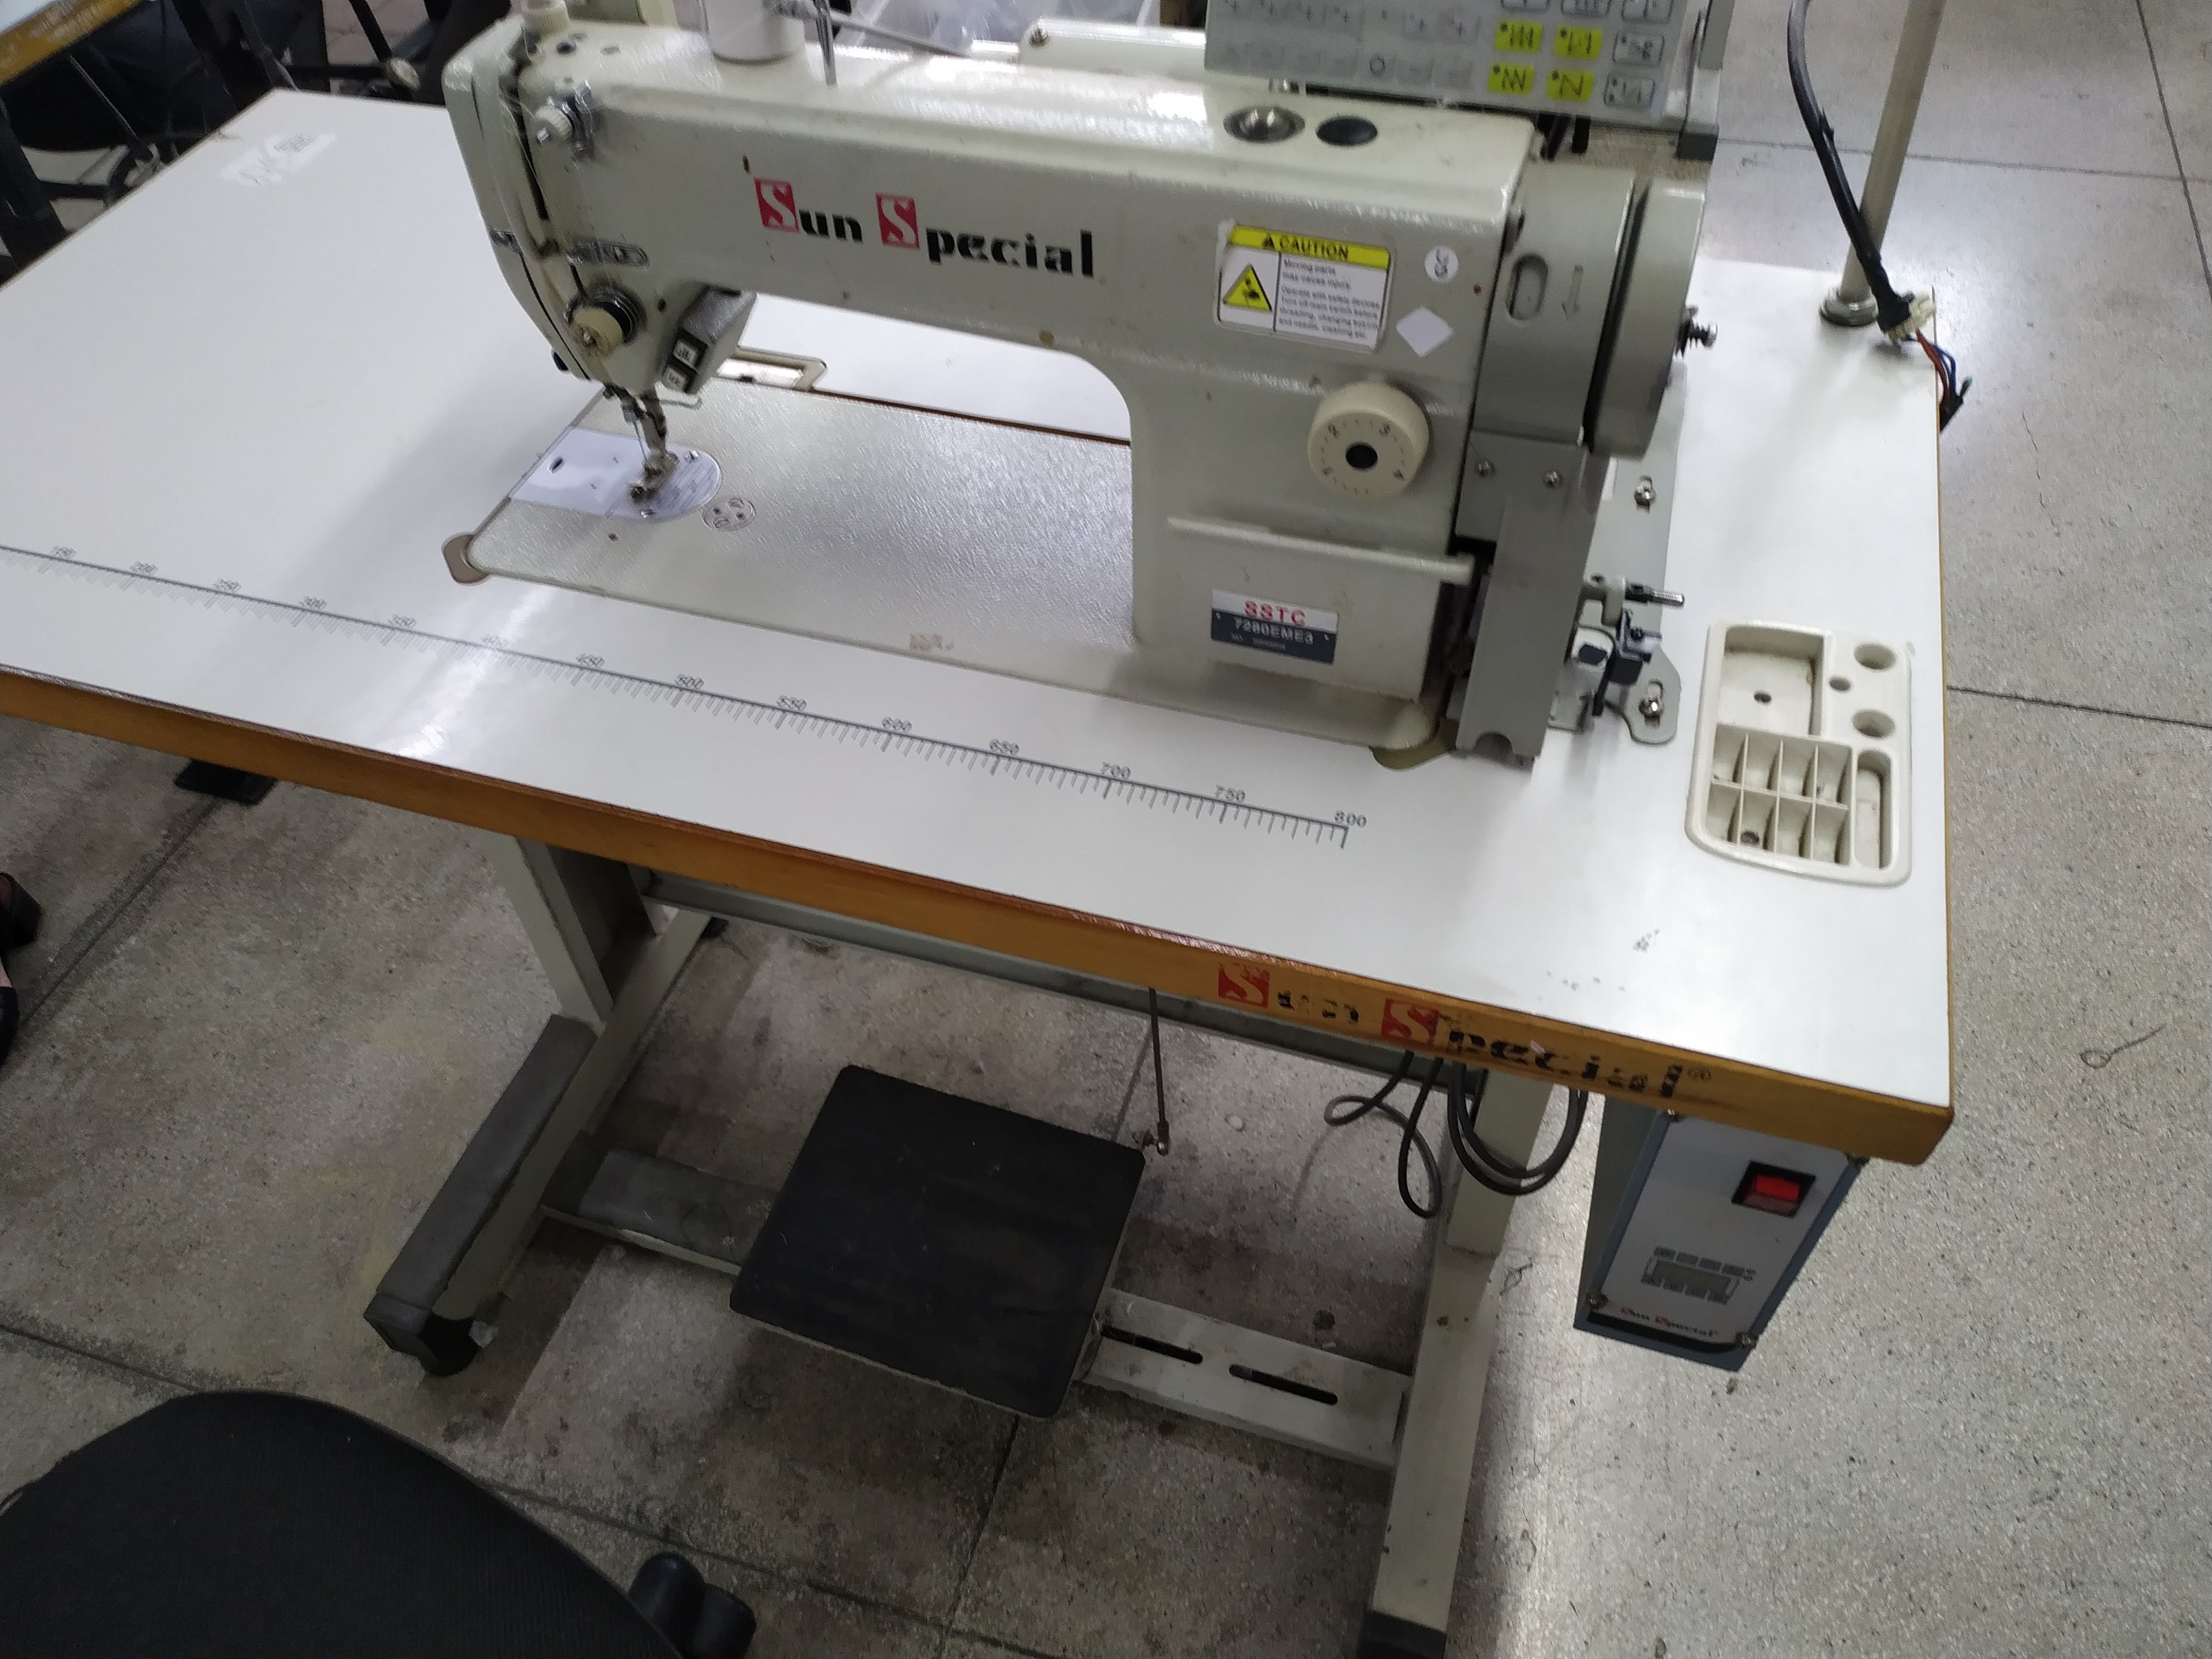 LOTE 01 - Máquinas de Costura - PROCESSO 0010519-70.2020  - 19ª 